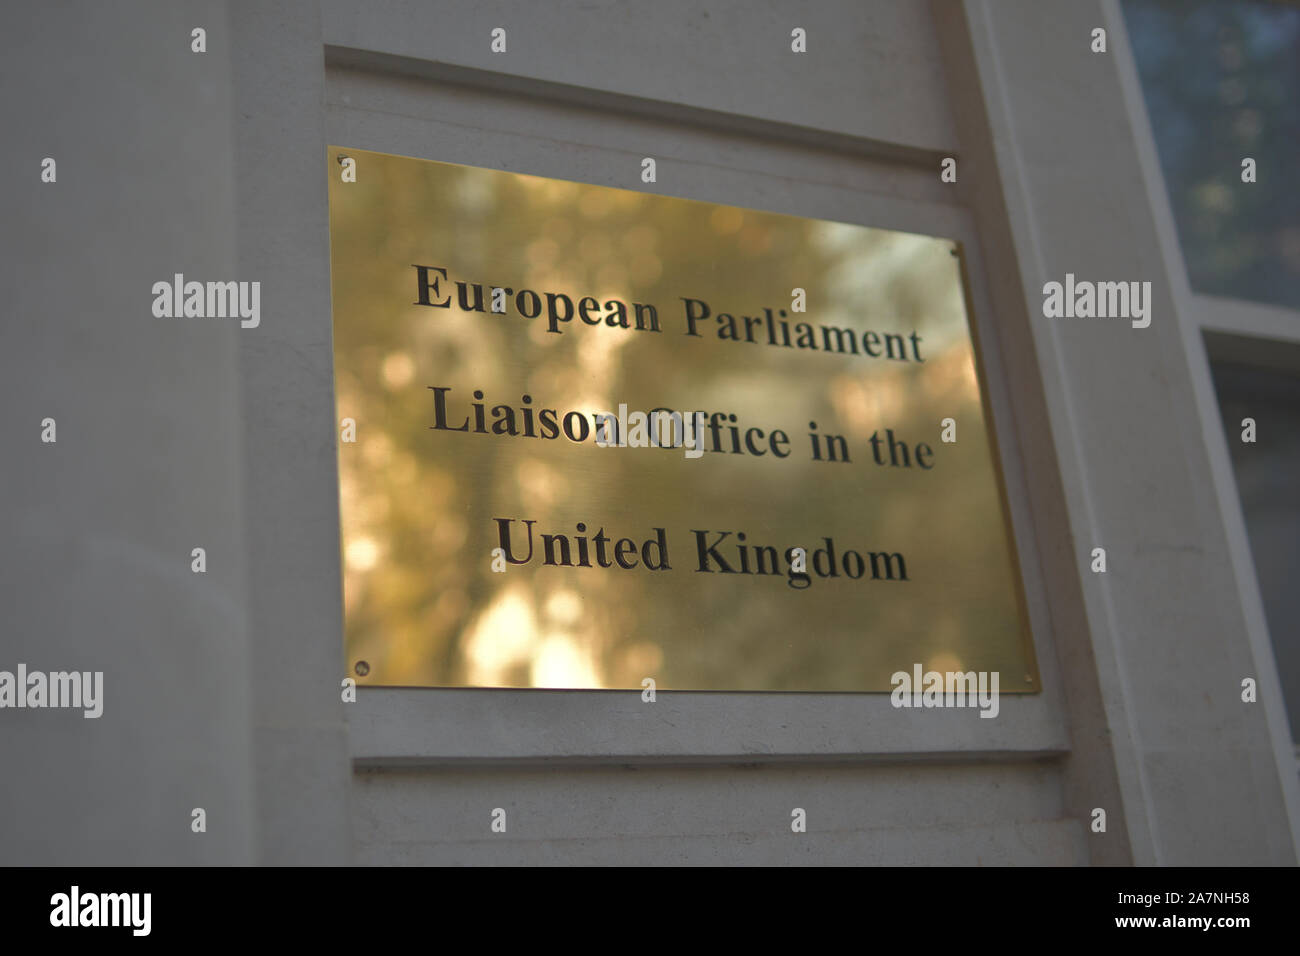 European Parliament Liaison Office in the United Kingdon Stock Photo